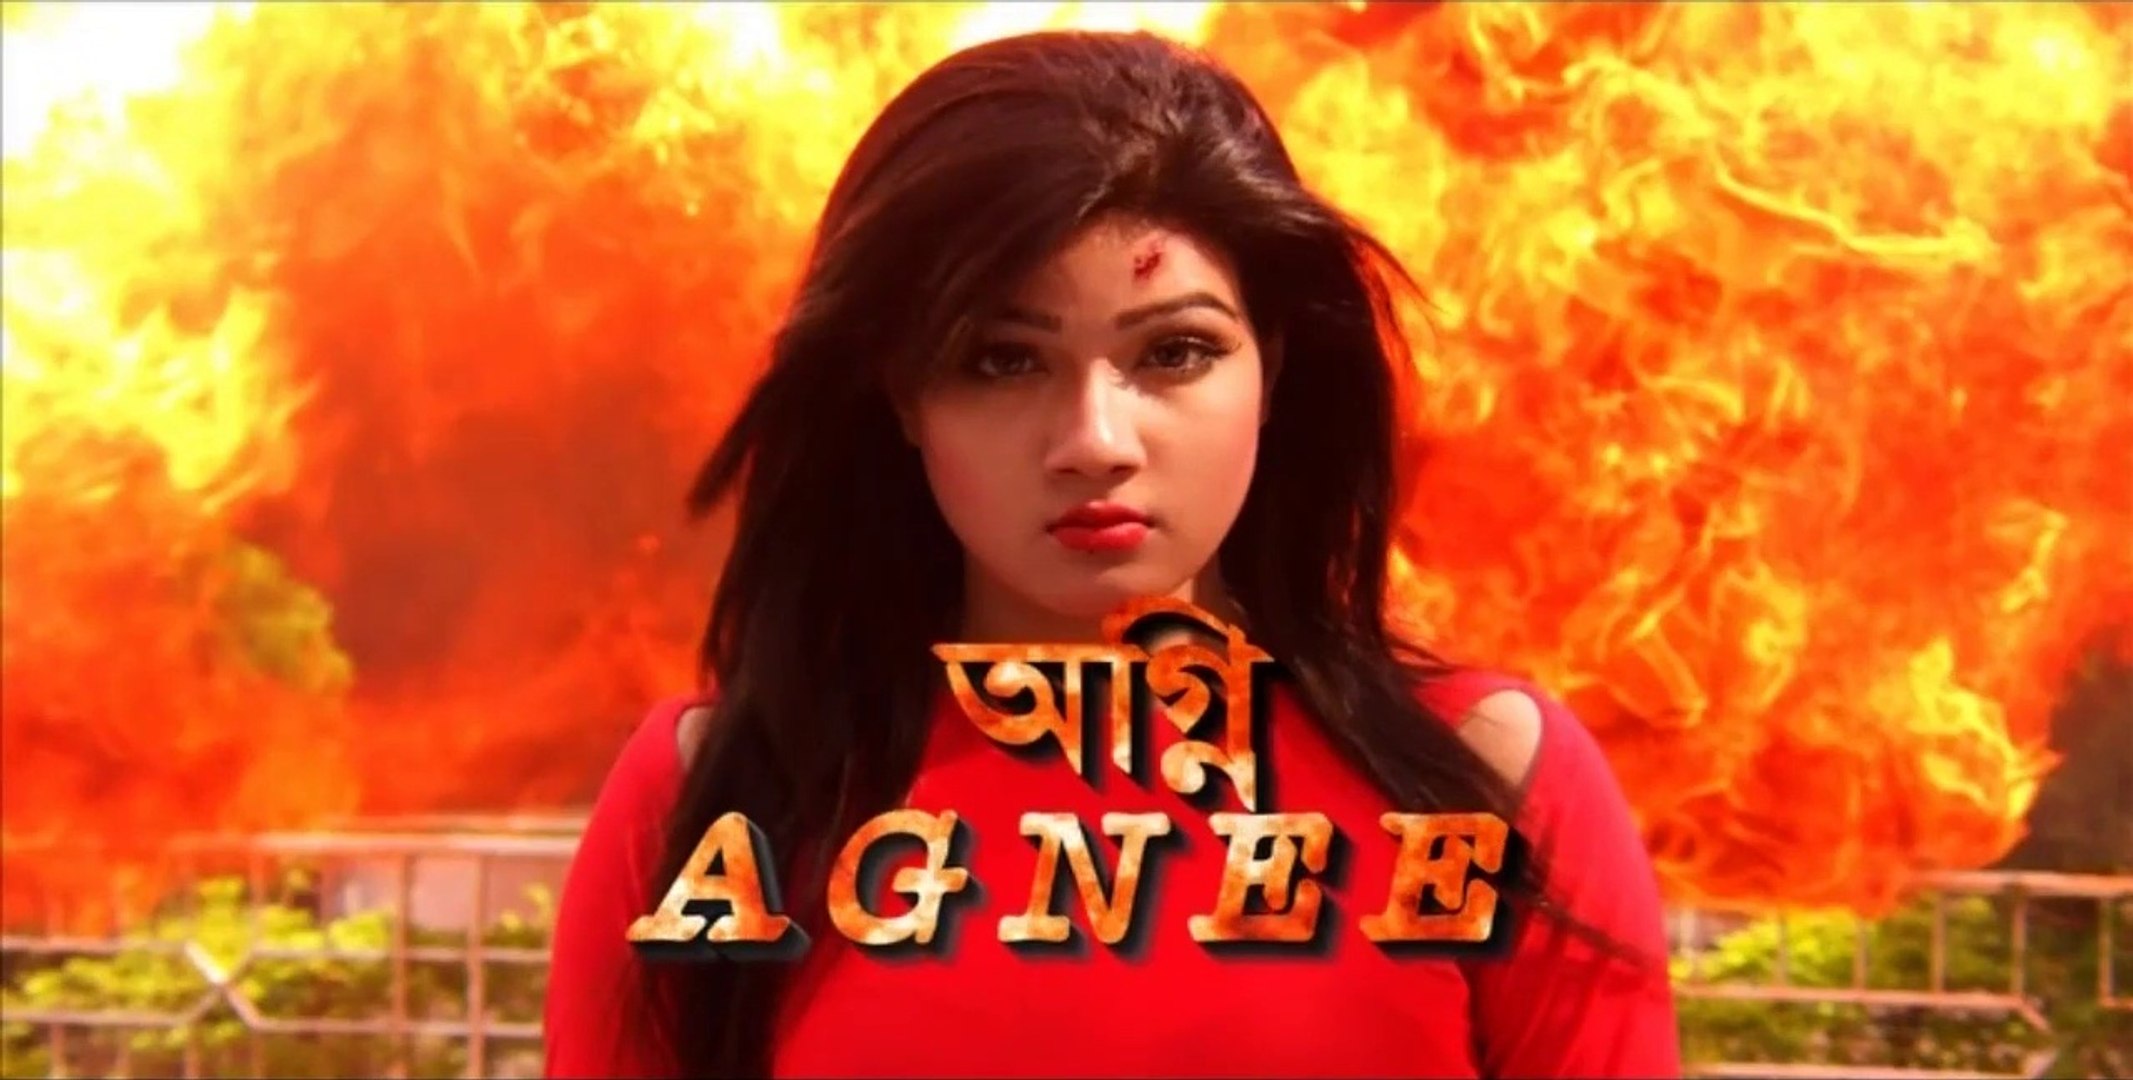 Agnee bangla full movie